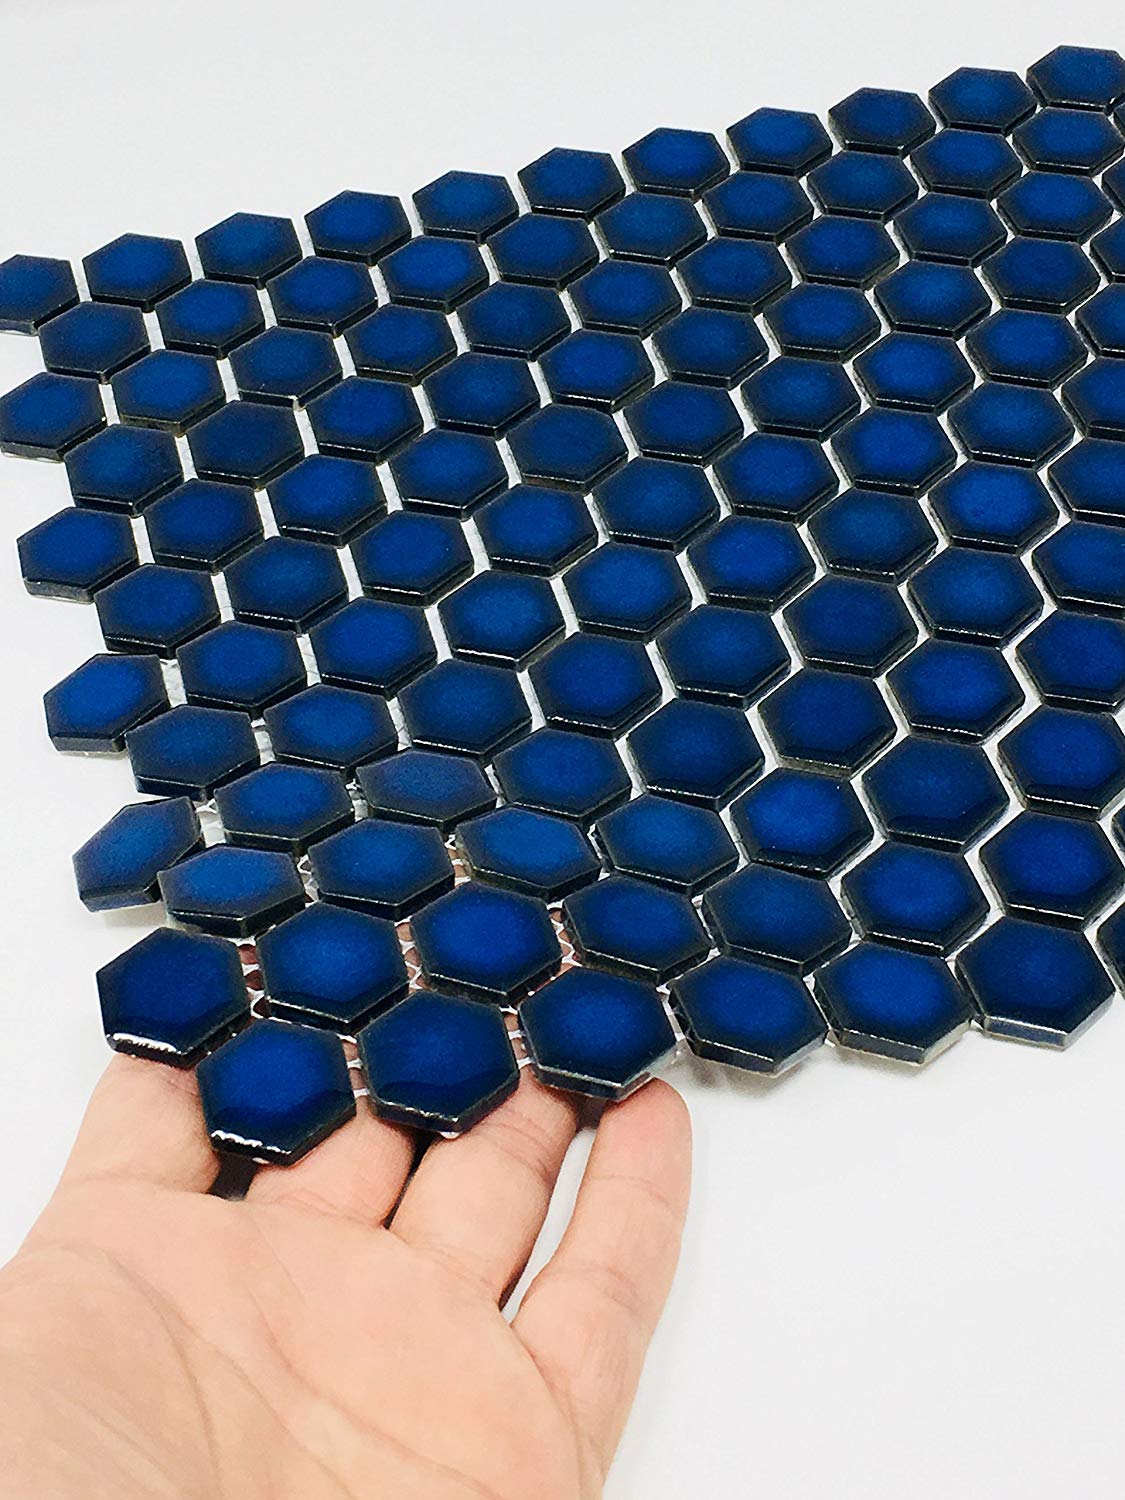 Hexagon Cobalt Blue Porcelain Floor Wall Tile Glossy Look 1'' Inch (Box of 10 Sheets) for Backsplash Kitchen, Bathroom Shower, Accent Wall